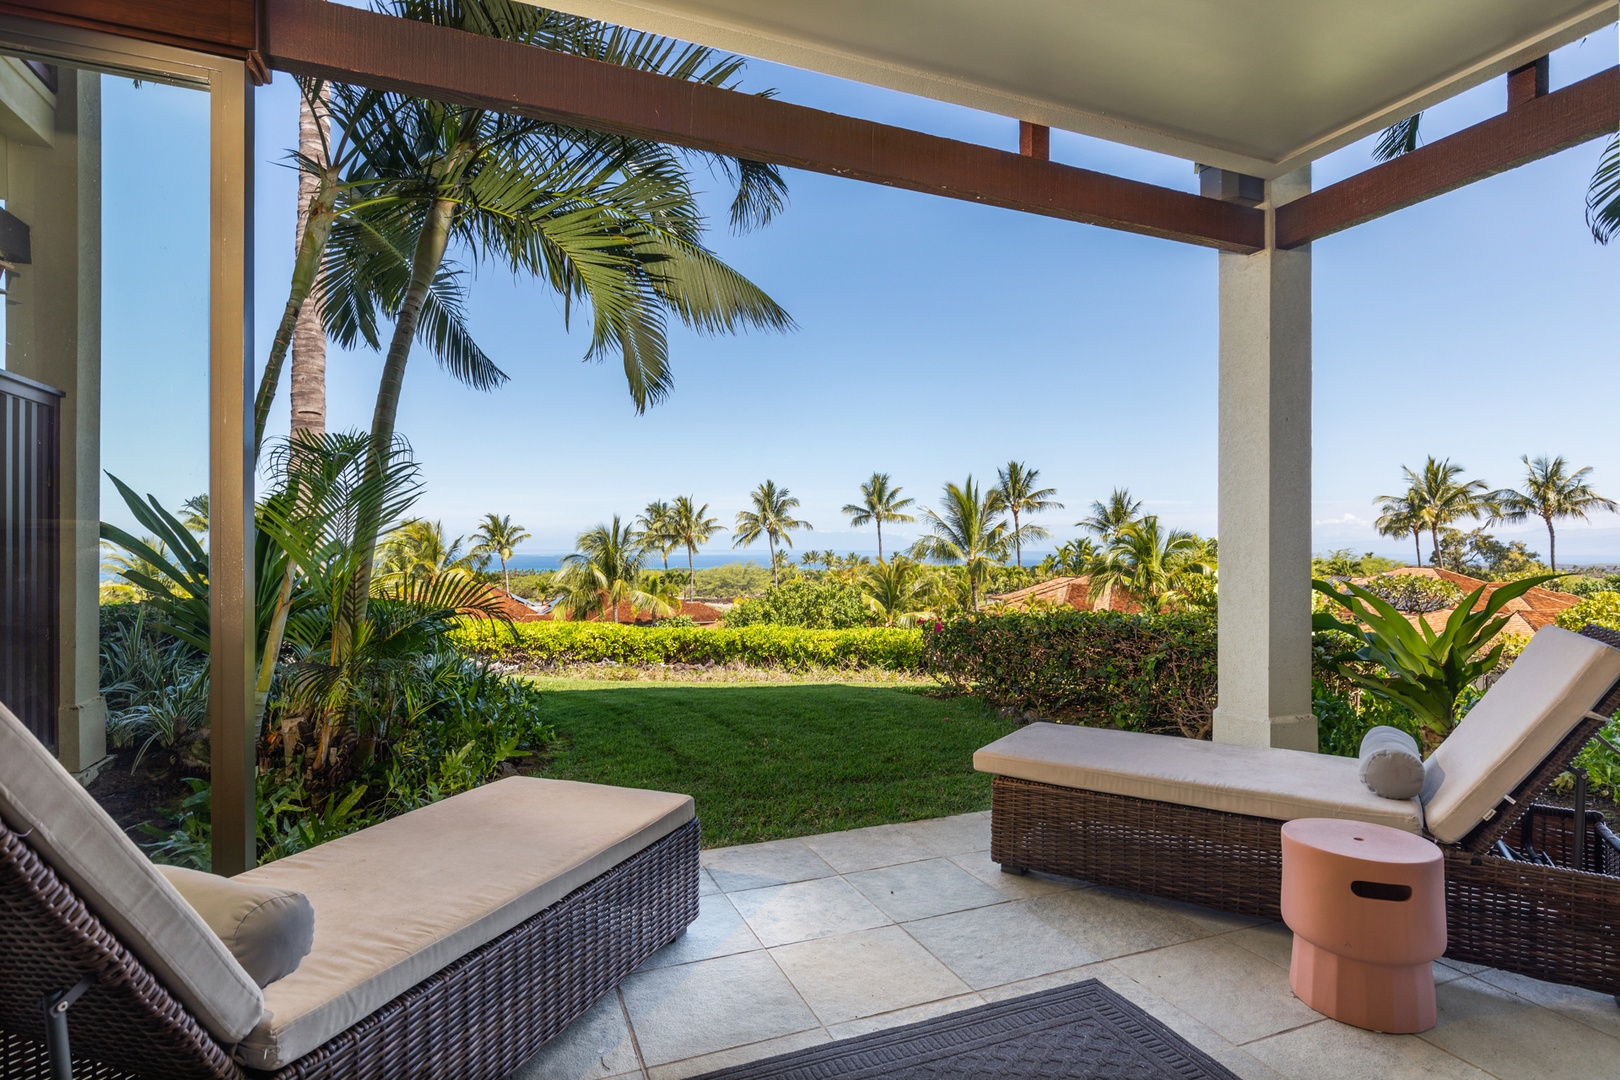 Kailua Kona Vacation Rentals, 3BD Hainoa Villa (2907C) at Four Seasons Resort at Hualalai - Private lanai with loungers off primary suite.